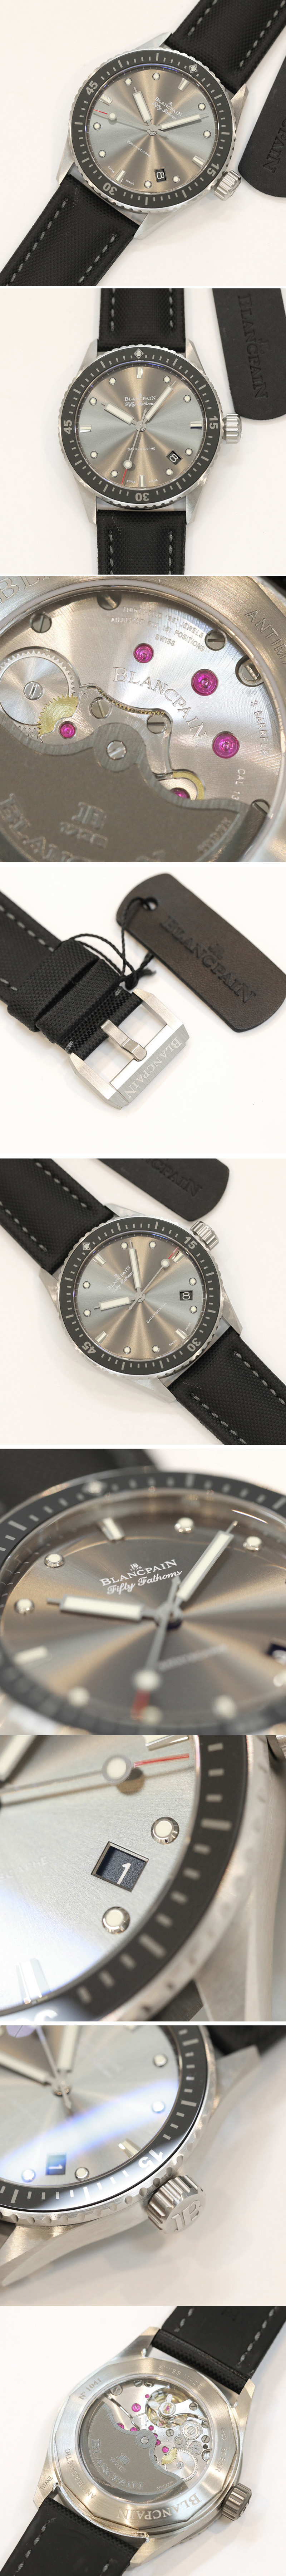 Replica Blancpain Watches